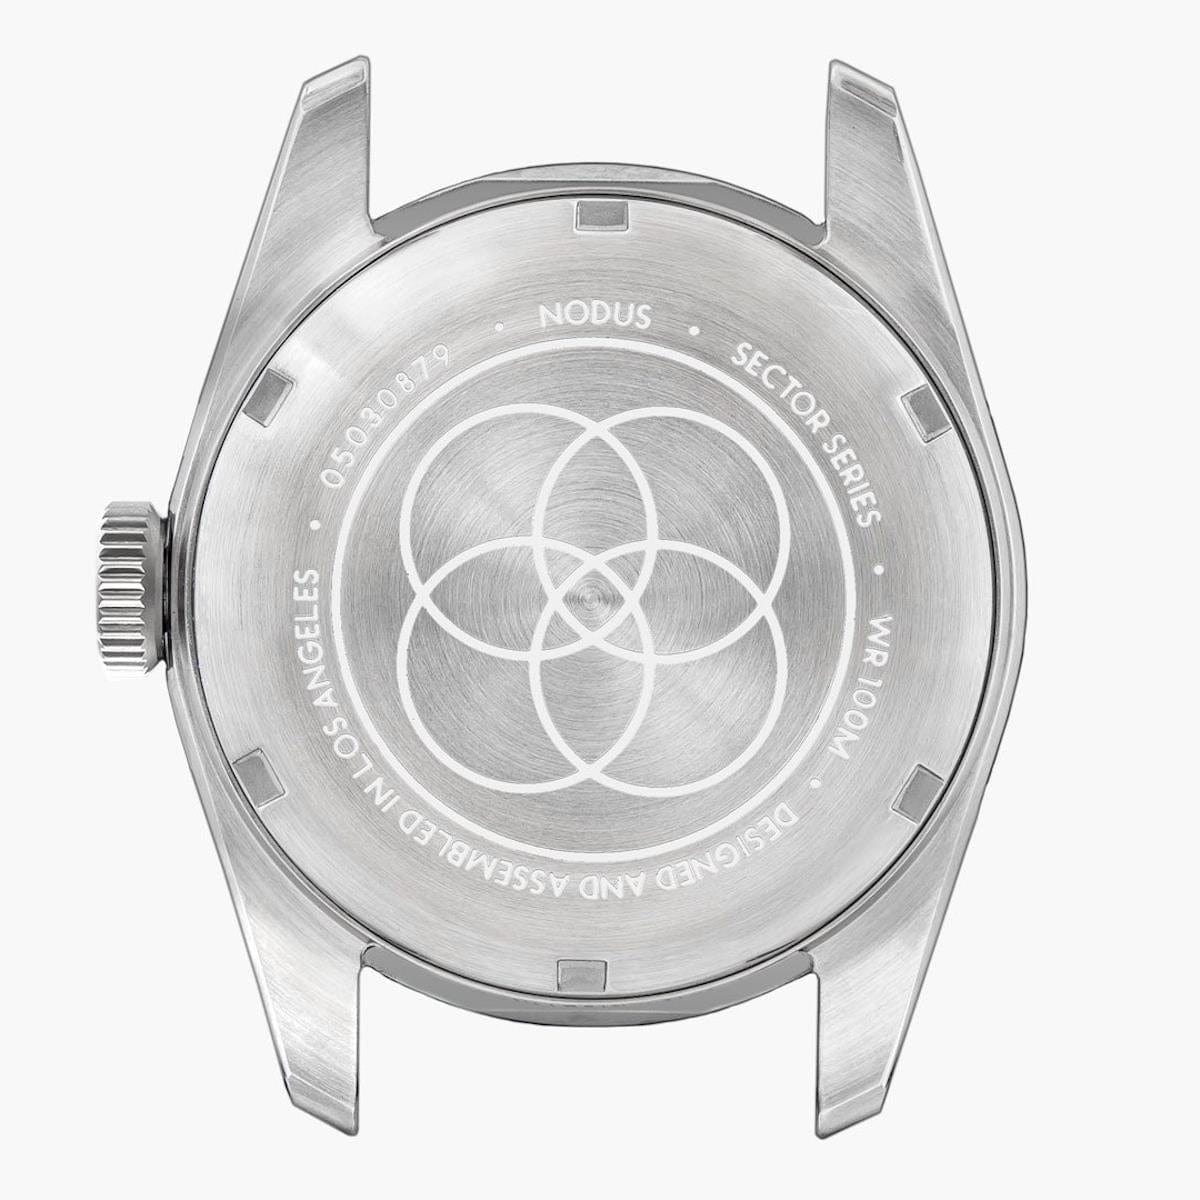 NODUS Sector GMT - Metro - Pentalink Bracelet